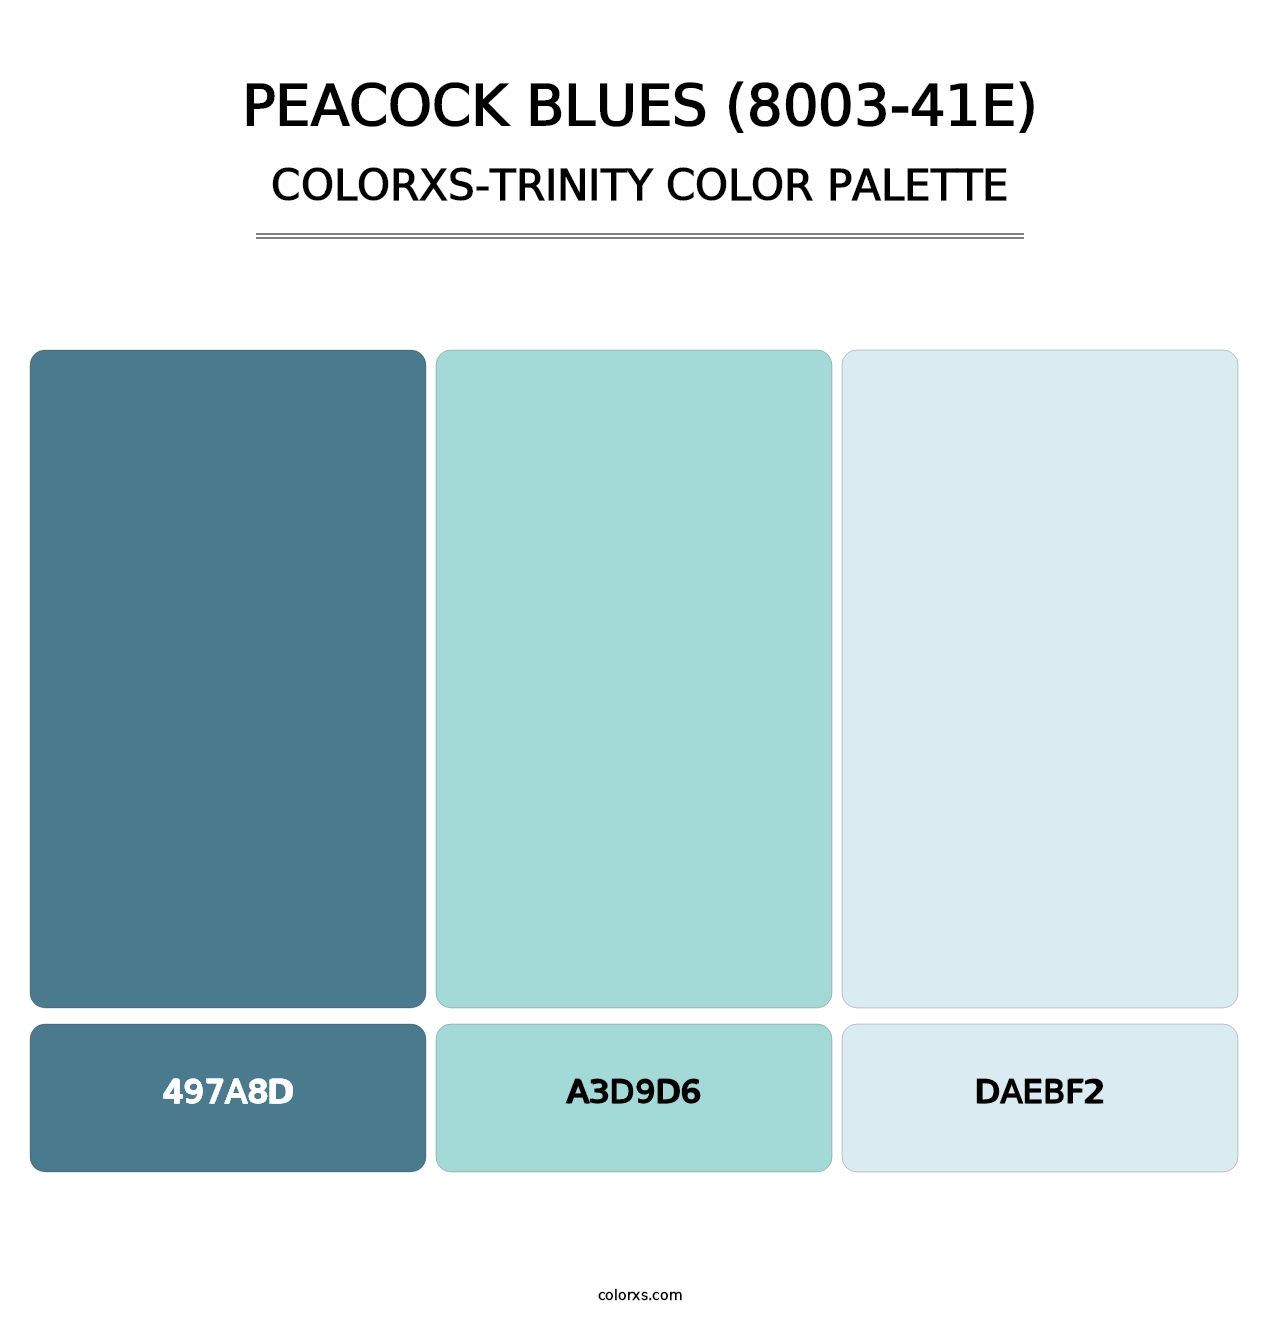 Peacock Blues (8003-41E) - Colorxs Trinity Palette